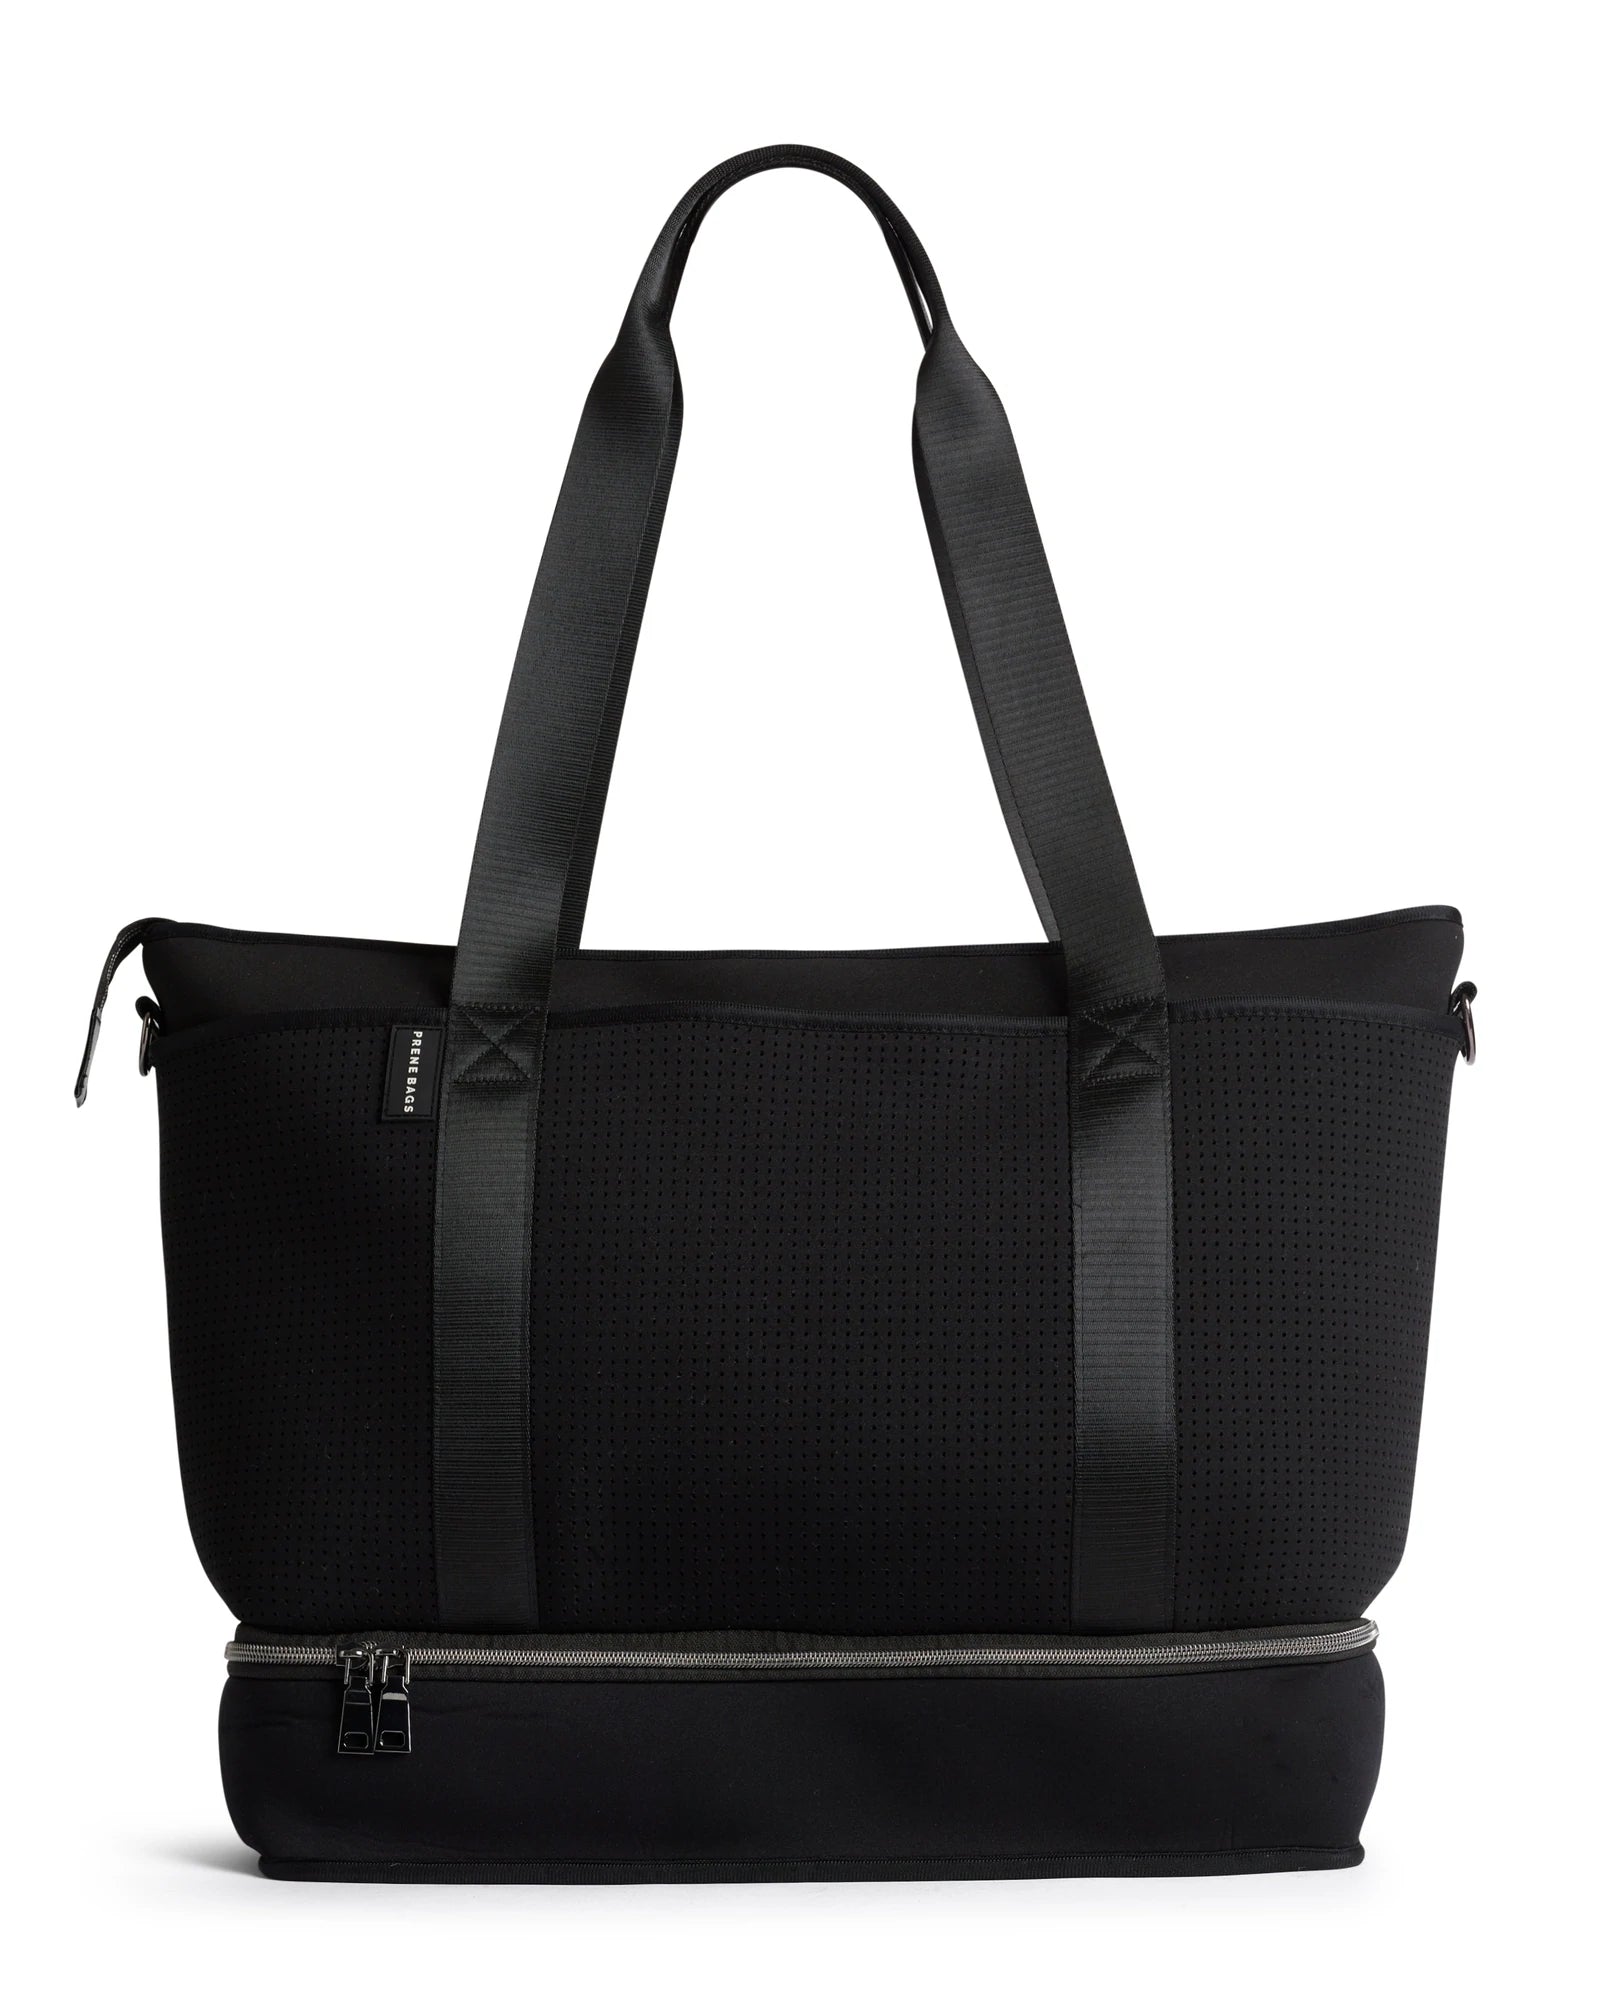 Prene - Saturday Baby/Travel Bag - Black